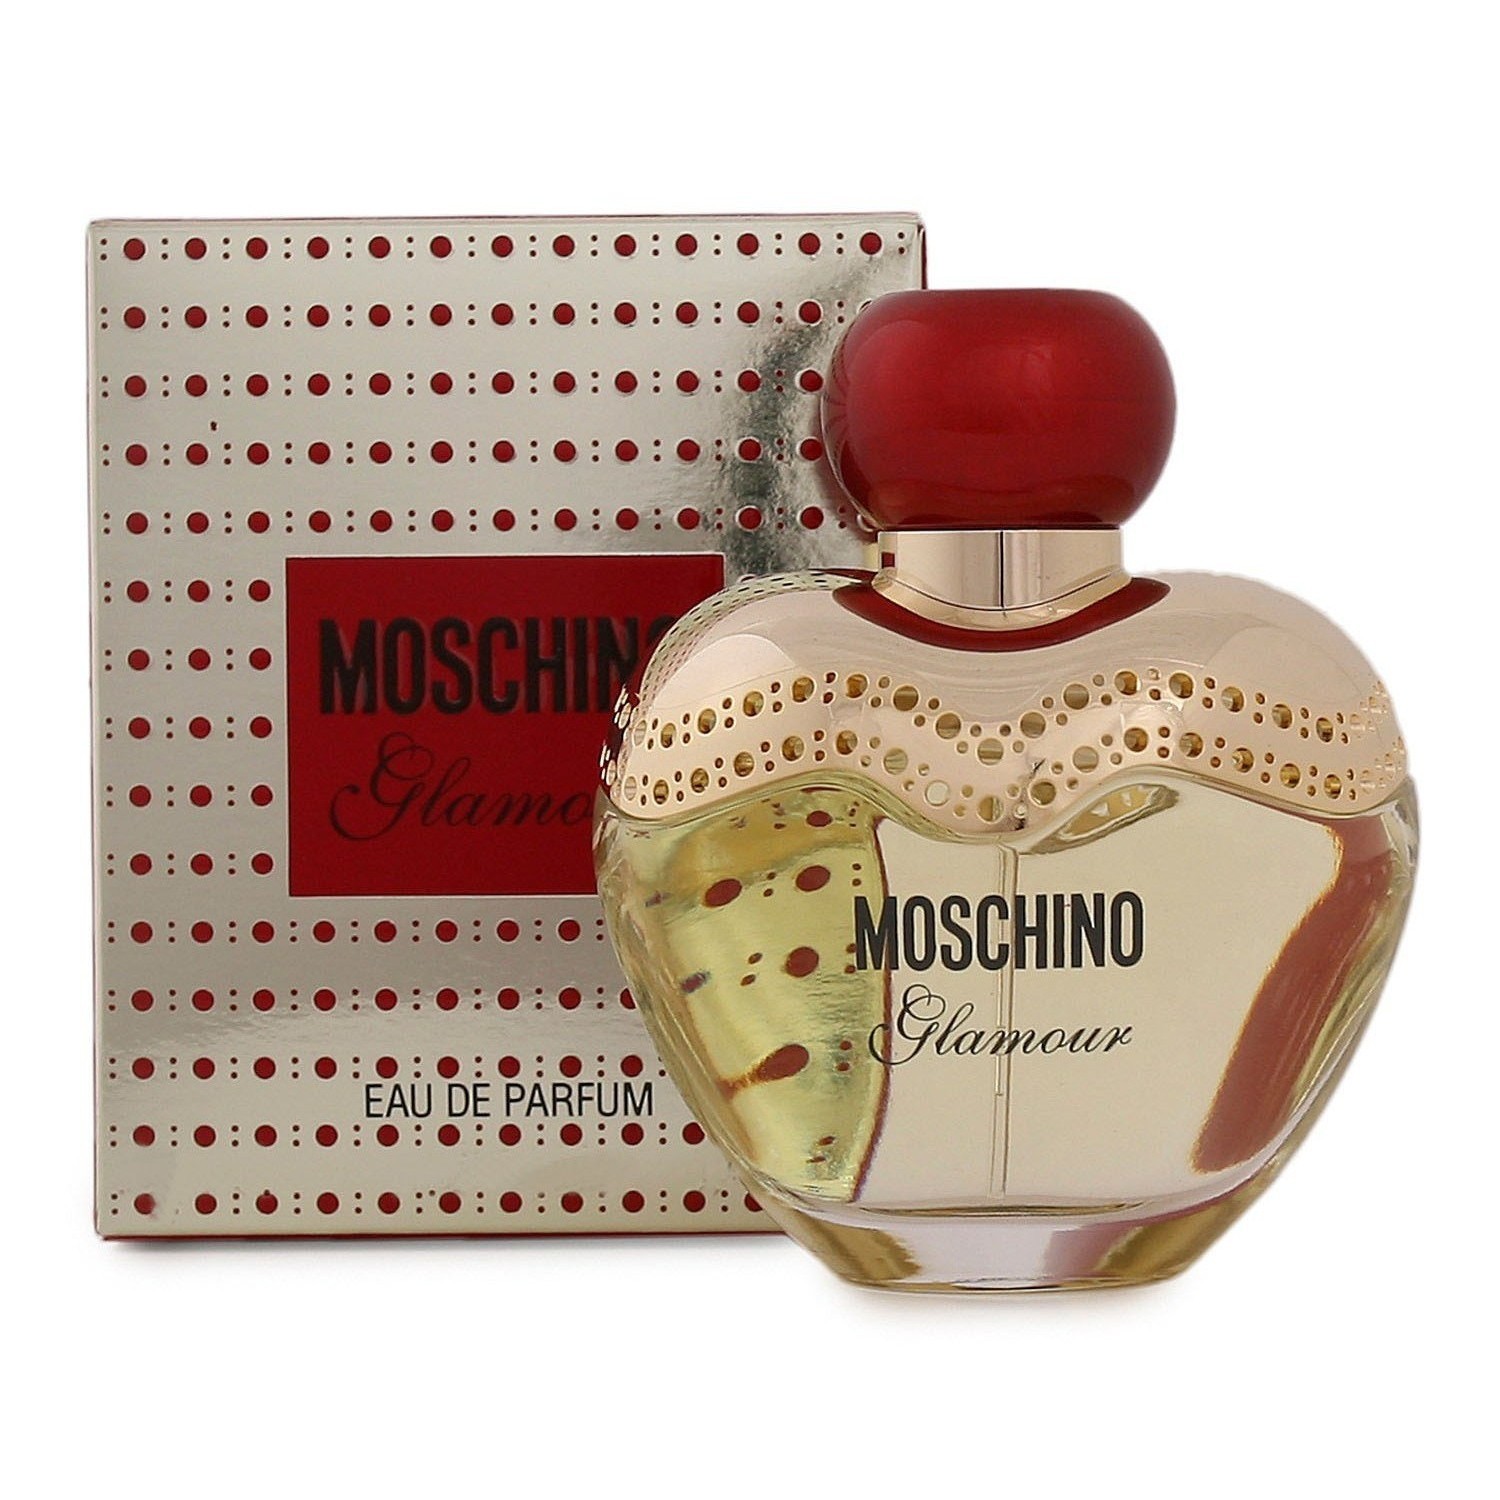 Купить Парфюмерная вода Moschino, Moschino Glamour 50ml, Италия